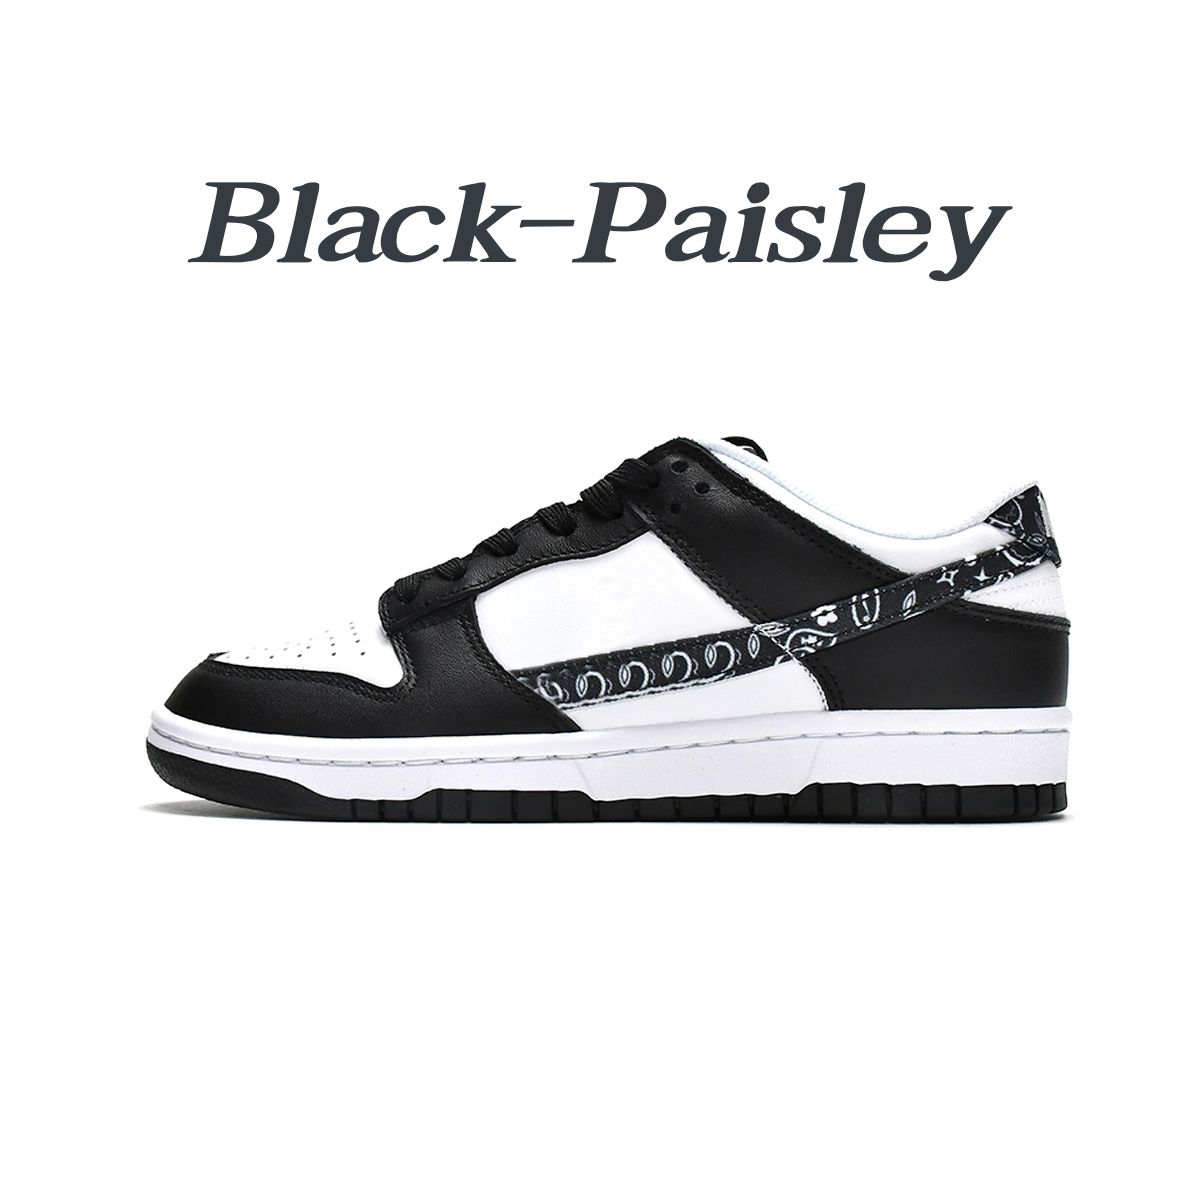 2.Black-Paisley